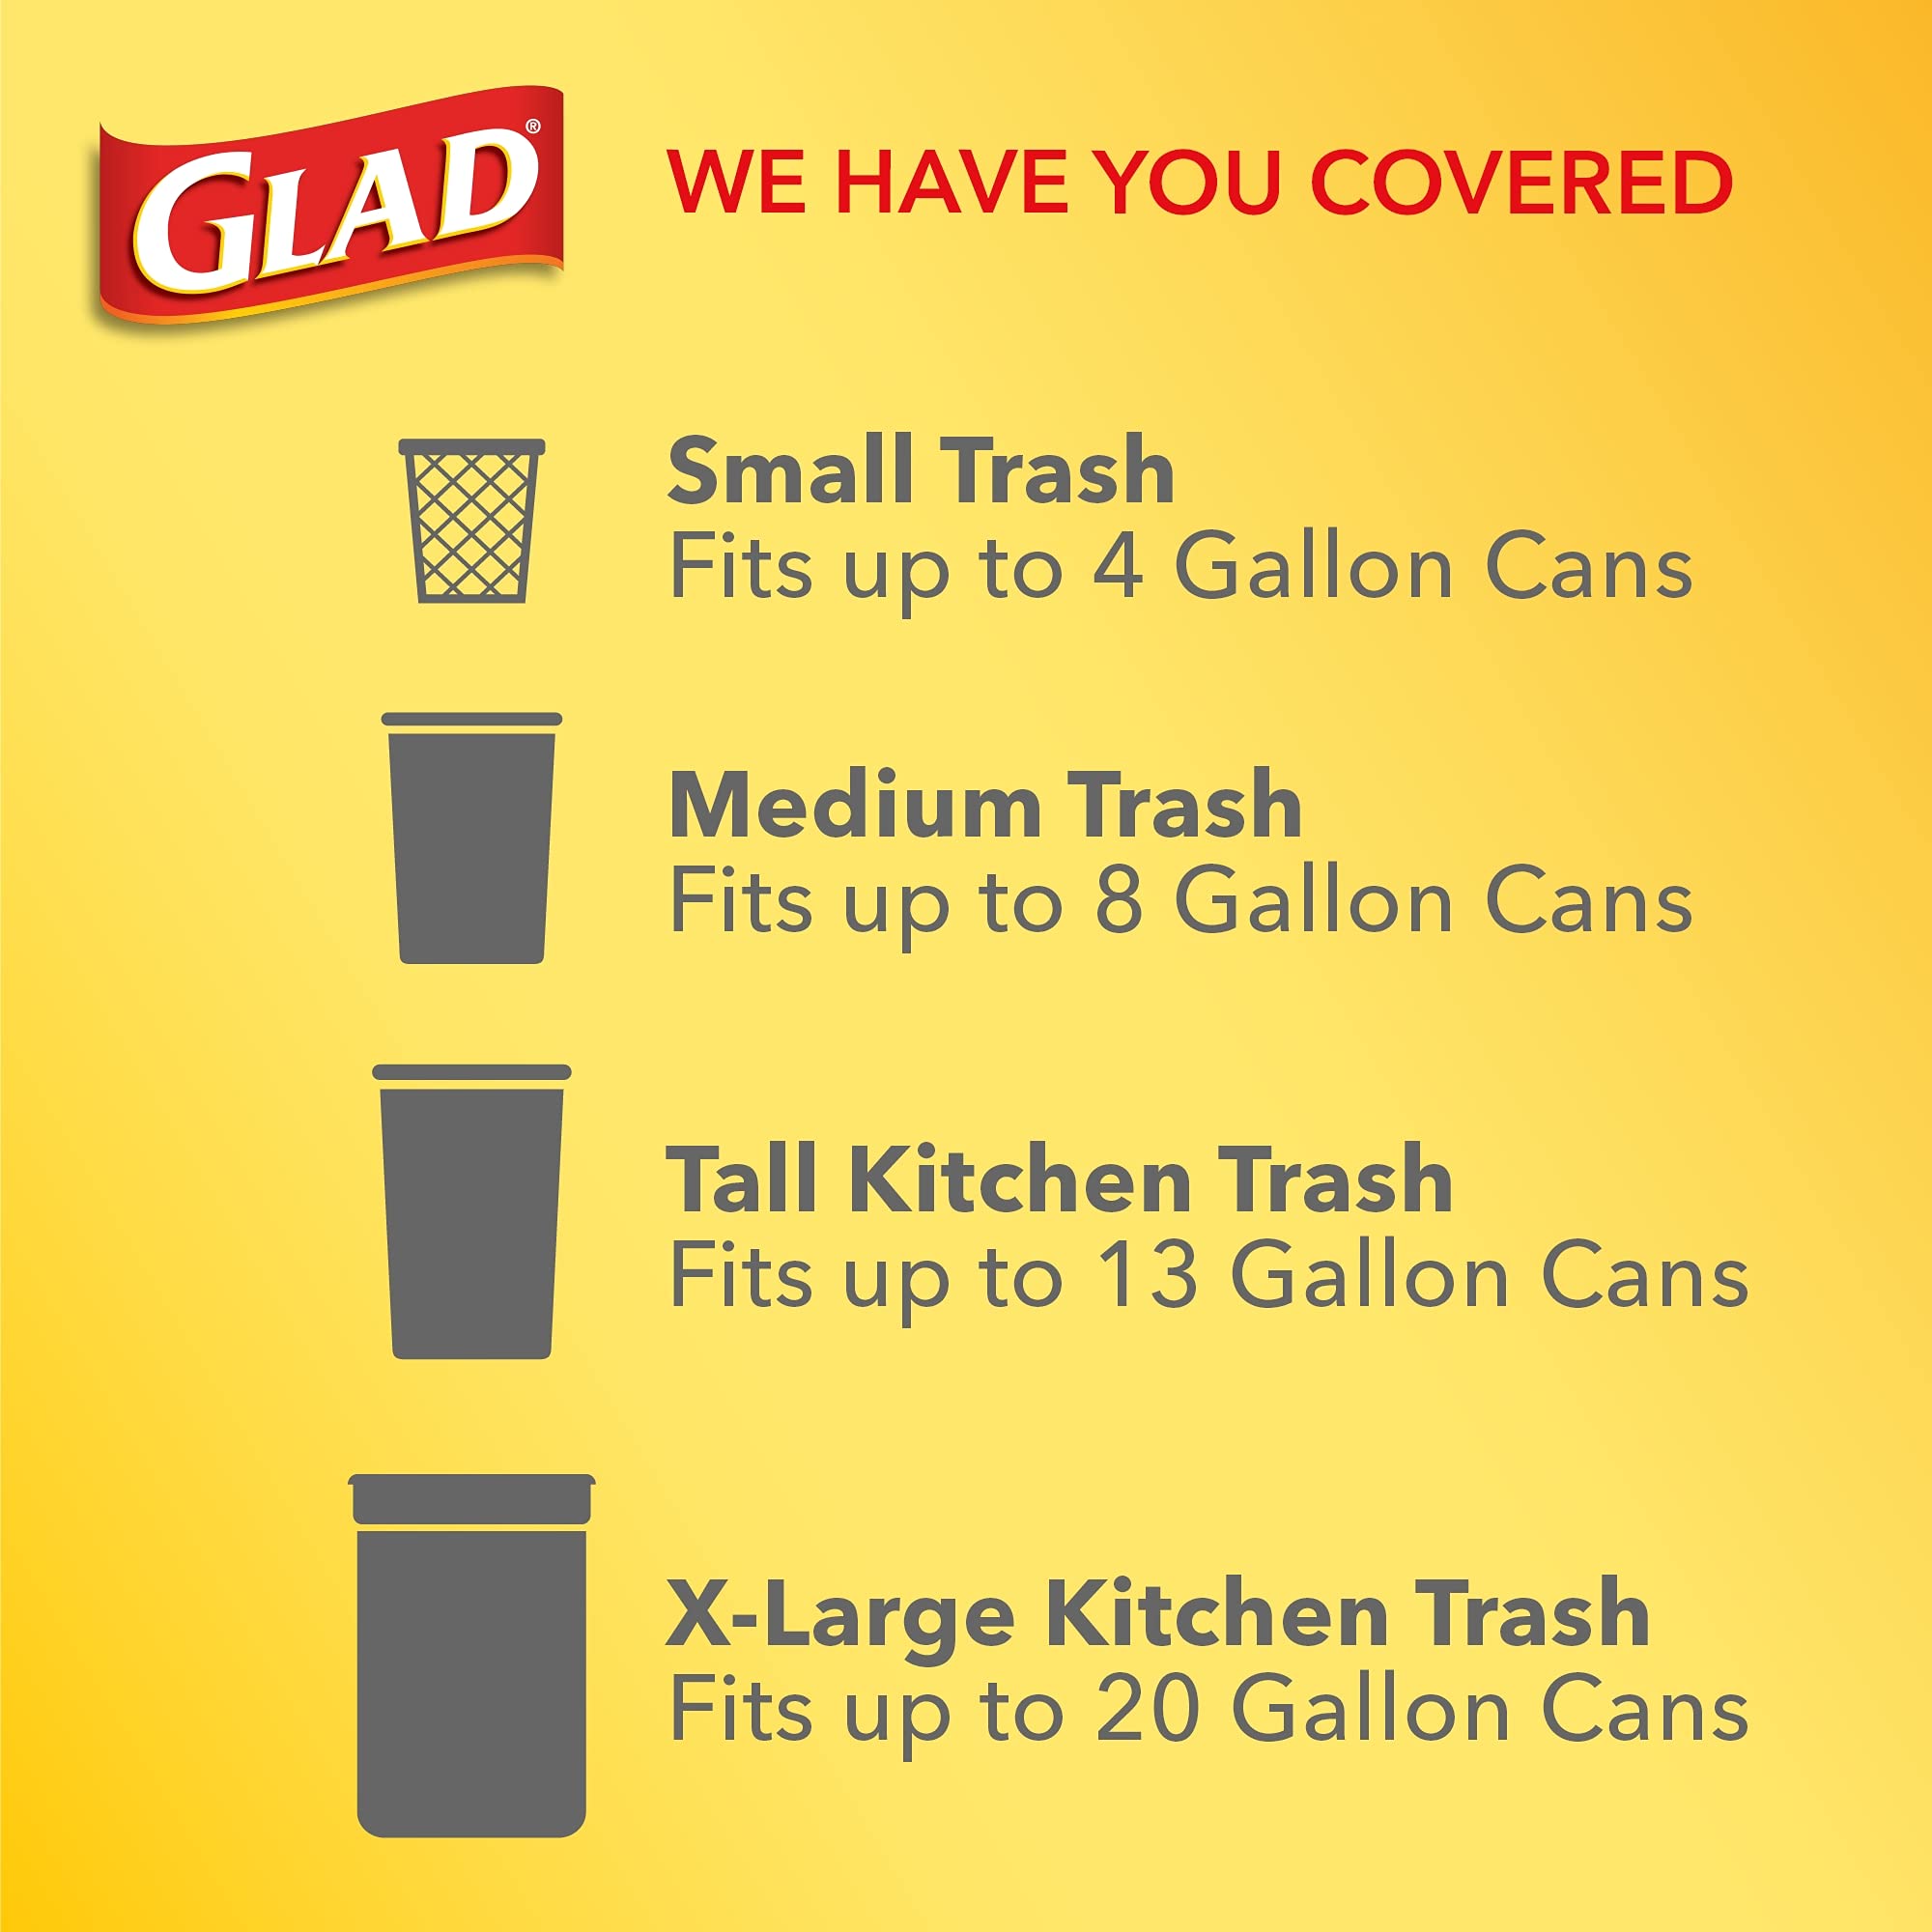 GLAD ForceFlex Tall Kitchen Drawstring Trash Bags, 13 Gallon Grey Trash Bag for Kitchen Trash Can, Odor Shield, Odor Eliminator and Leak Protection, 110 Count